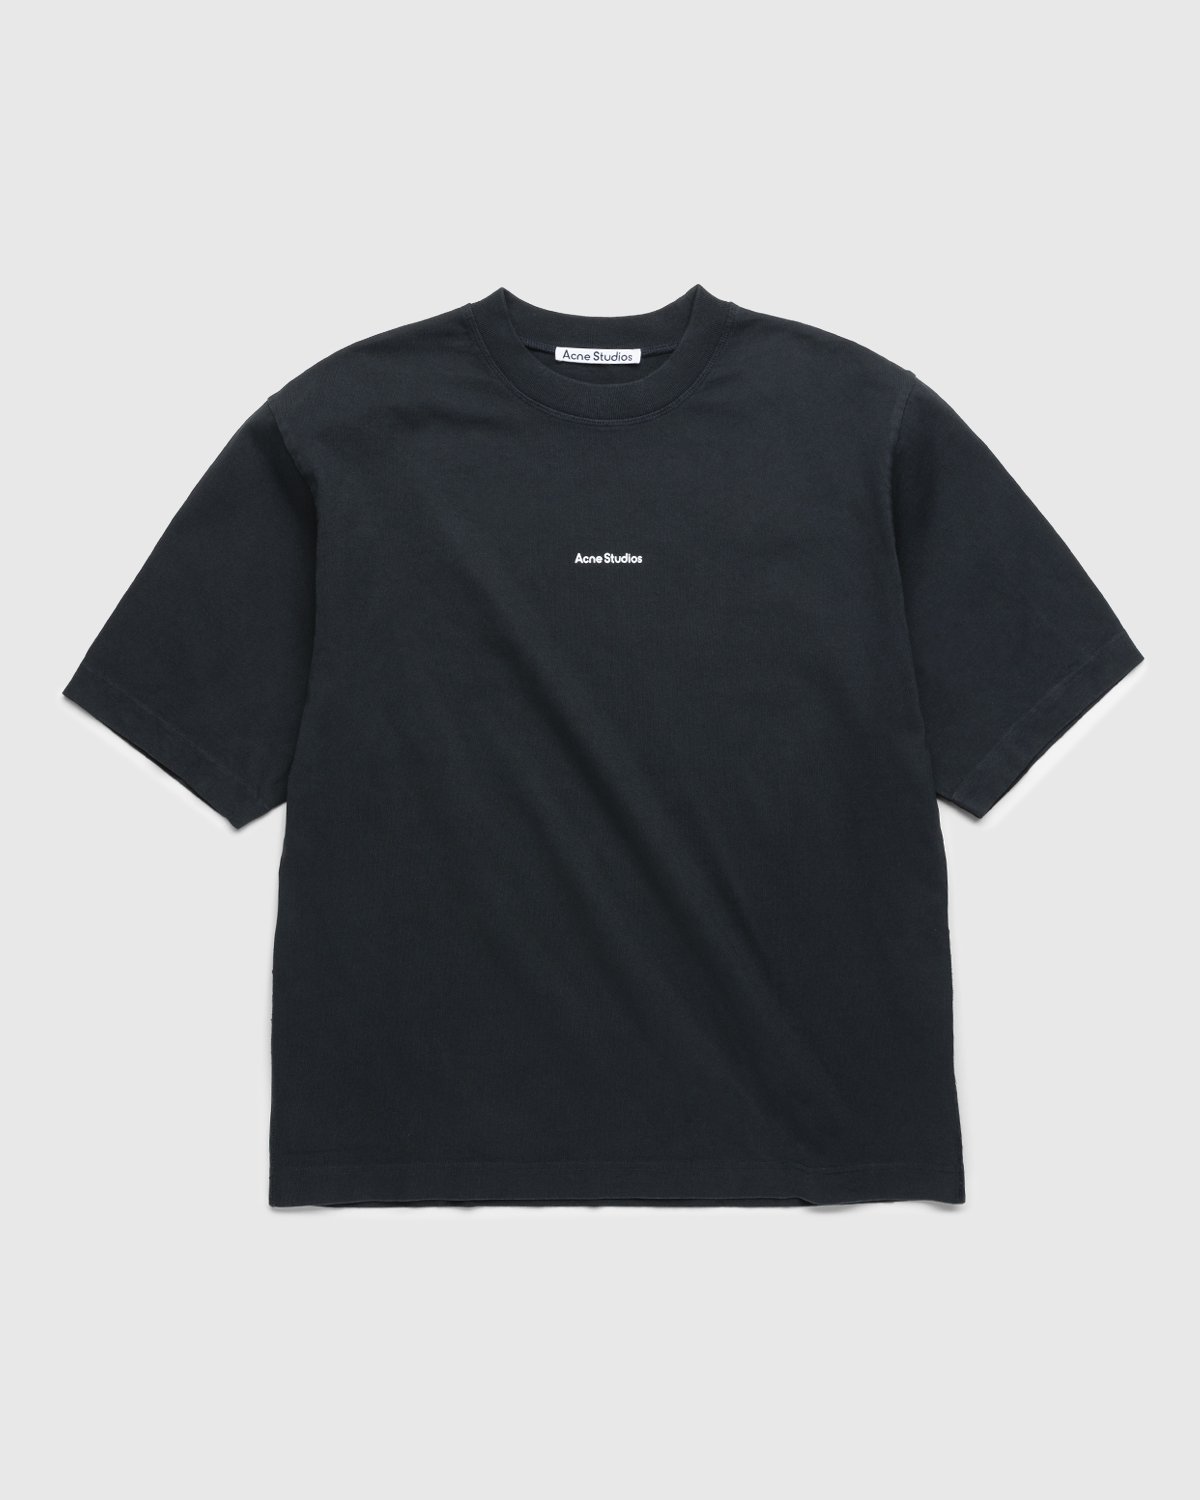 Acne Studios - Organic Cotton Logo T-Shirt Black - Clothing - Black - Image 1